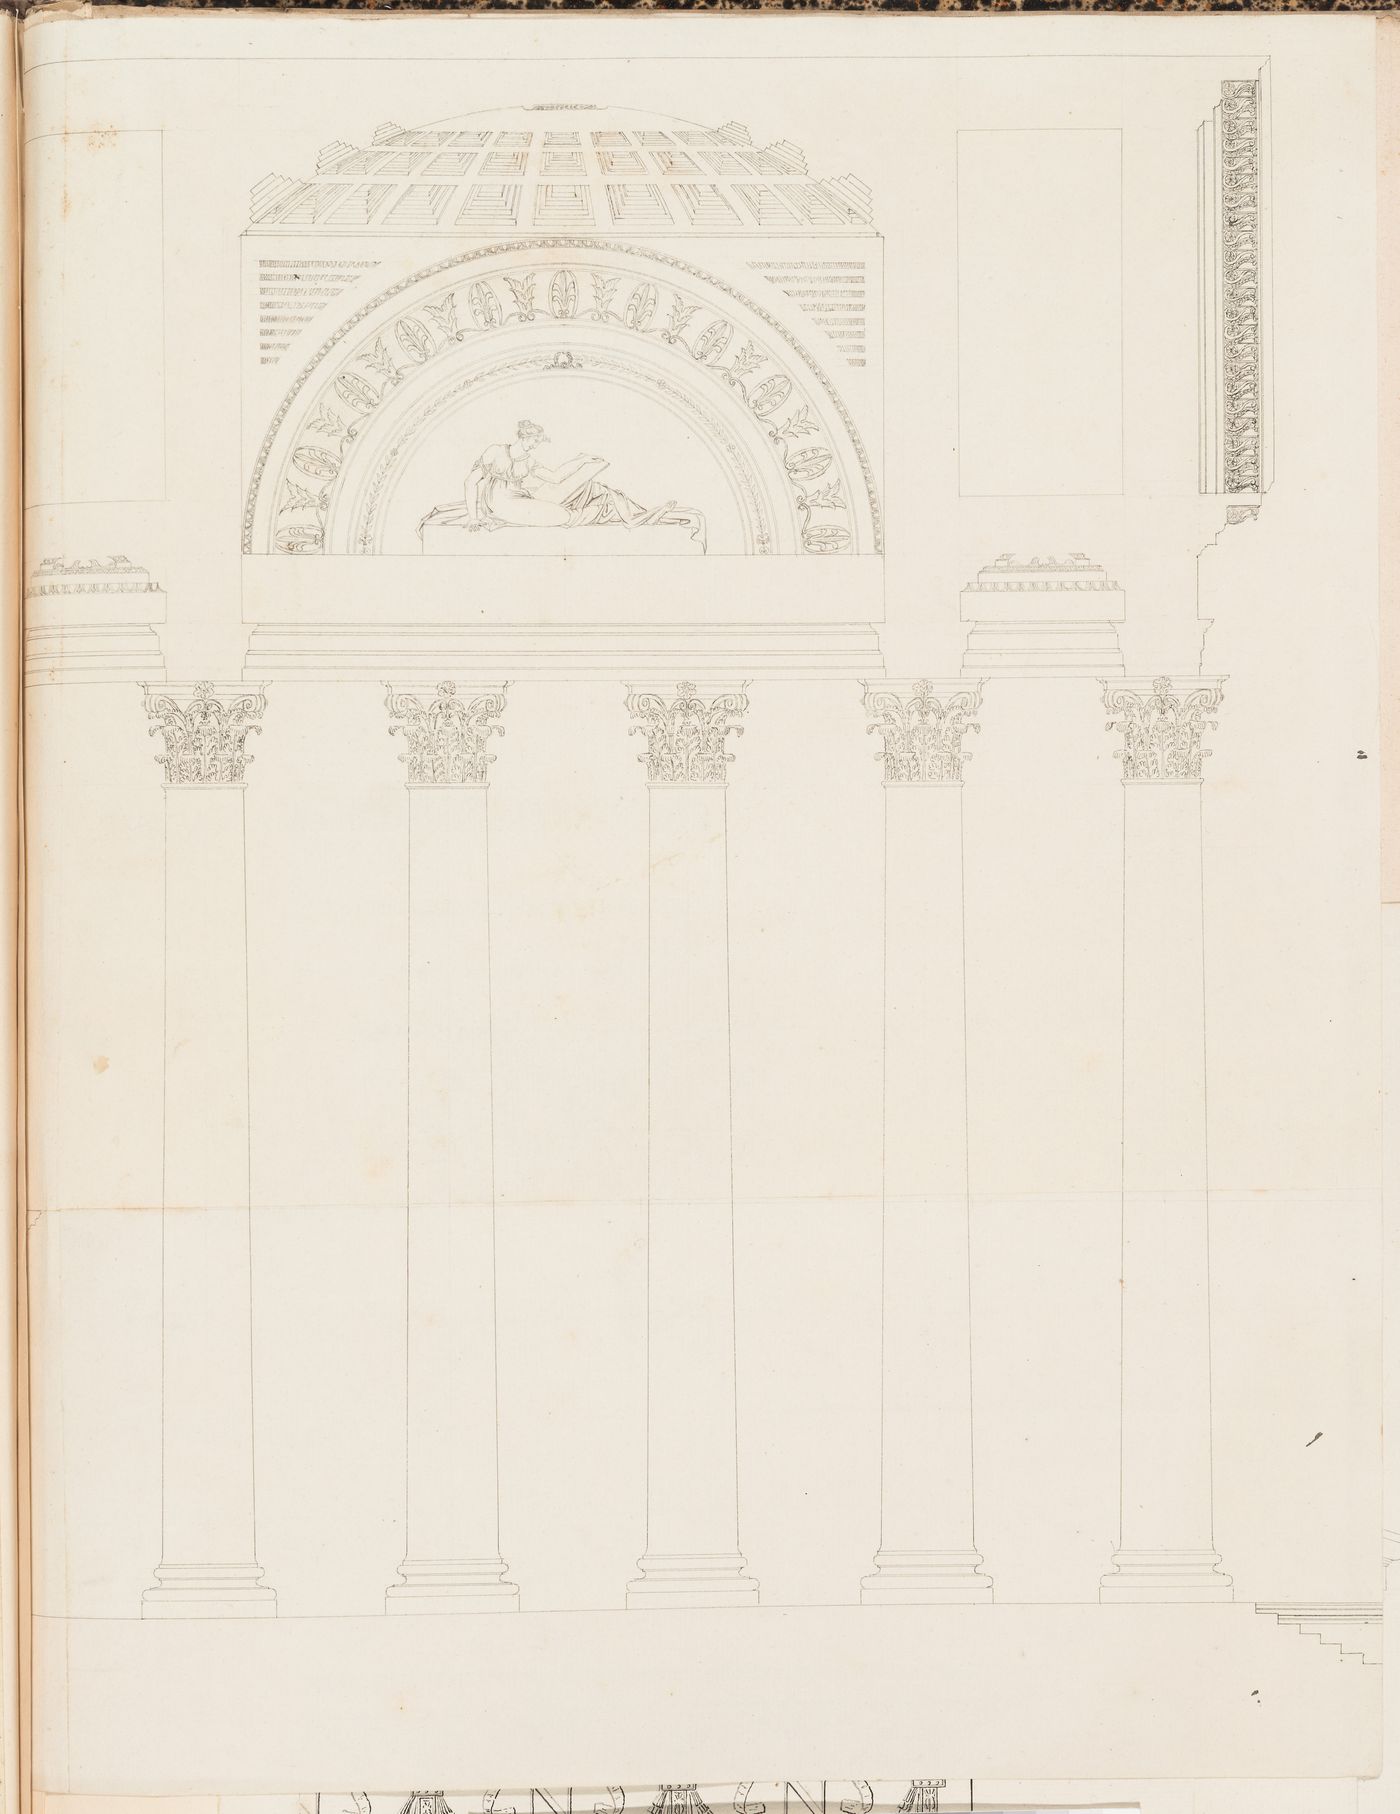 1800 Grand Prix Competition: Section through the portico for an École nationale des beaux-arts